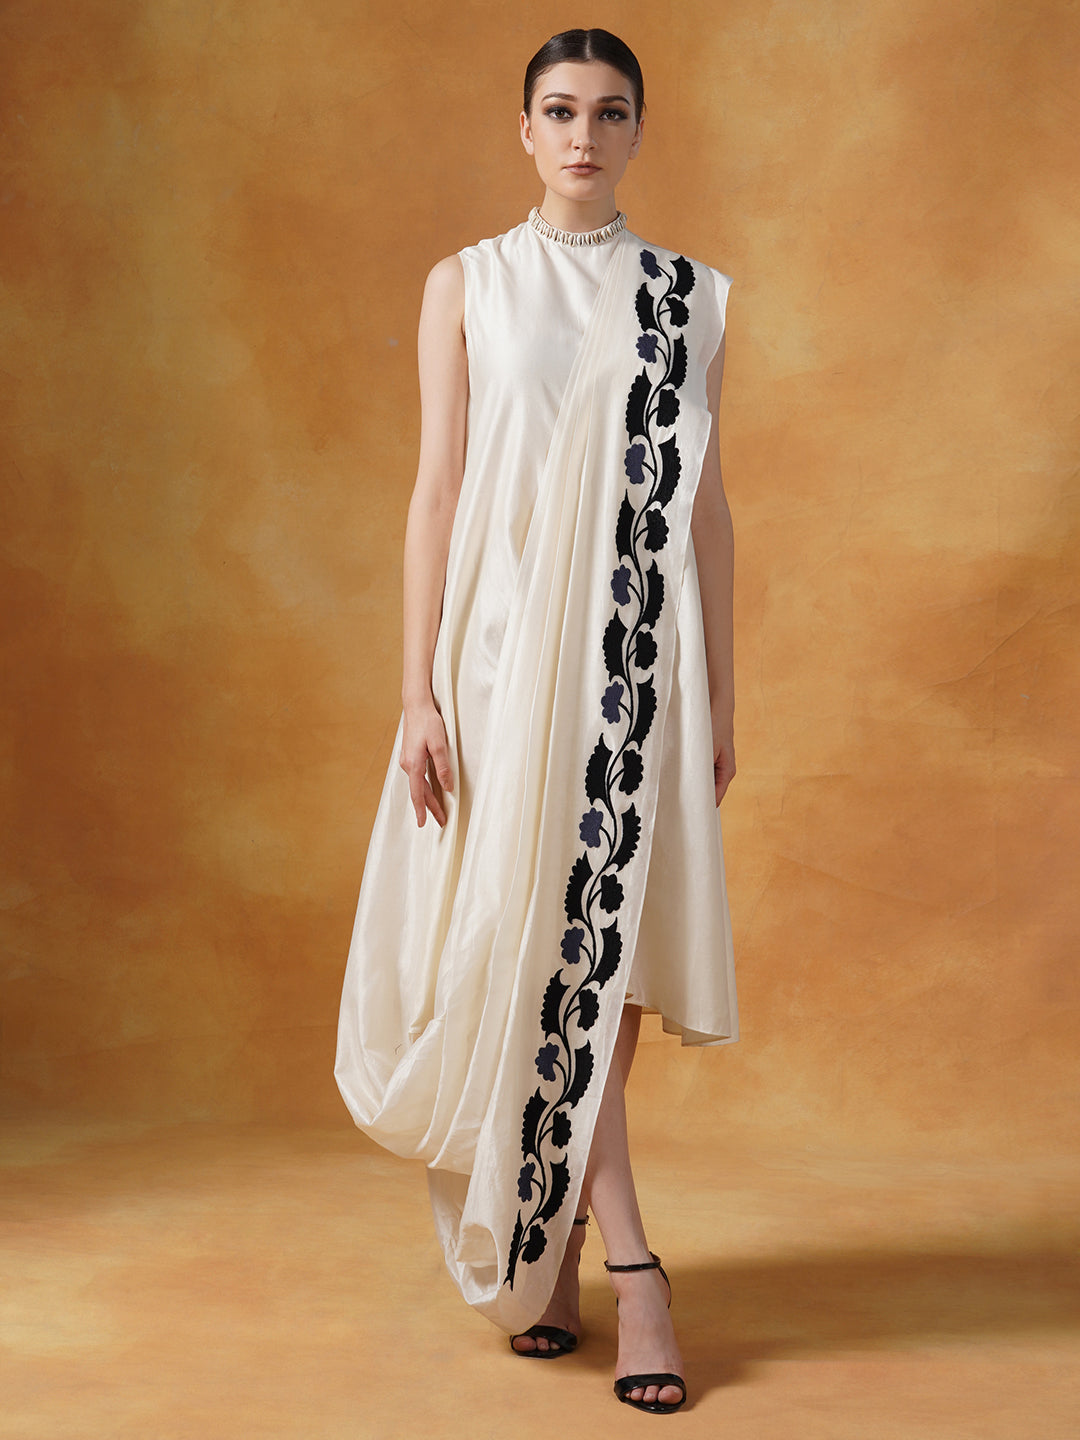 Black embroidery on an ivory cotton silk drape dress